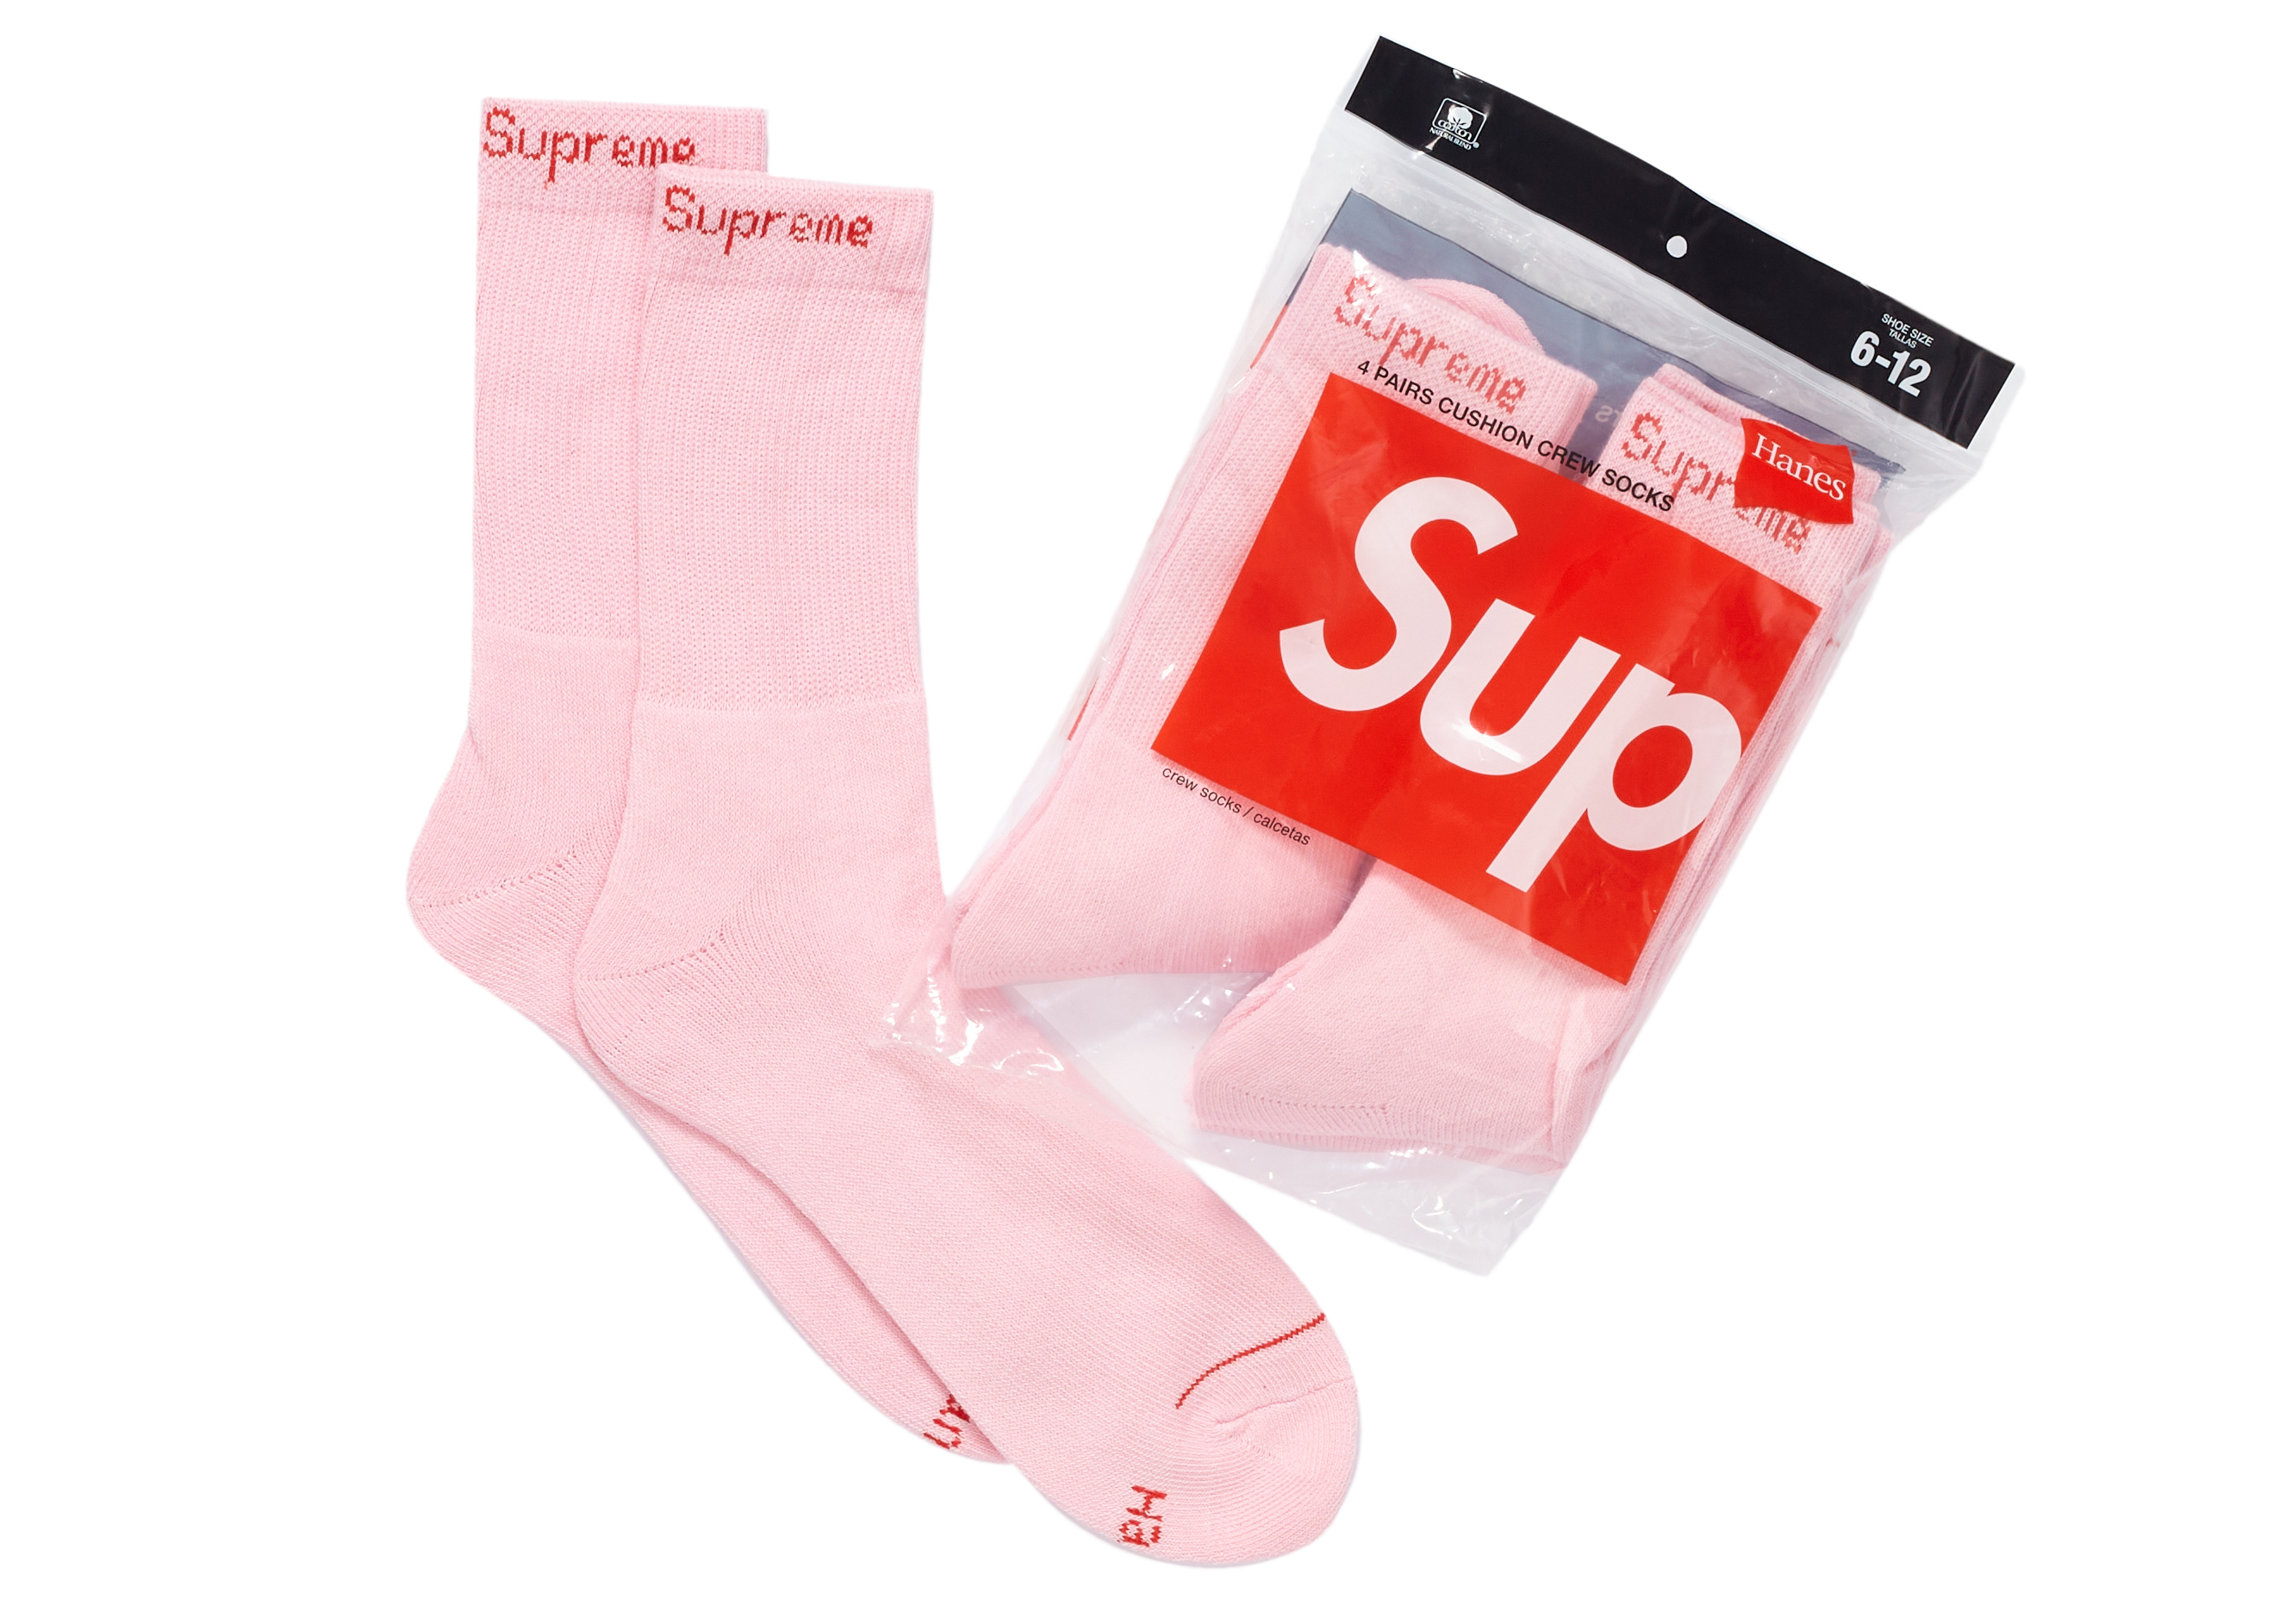 supreme hanes socks 2セットレッグウェア